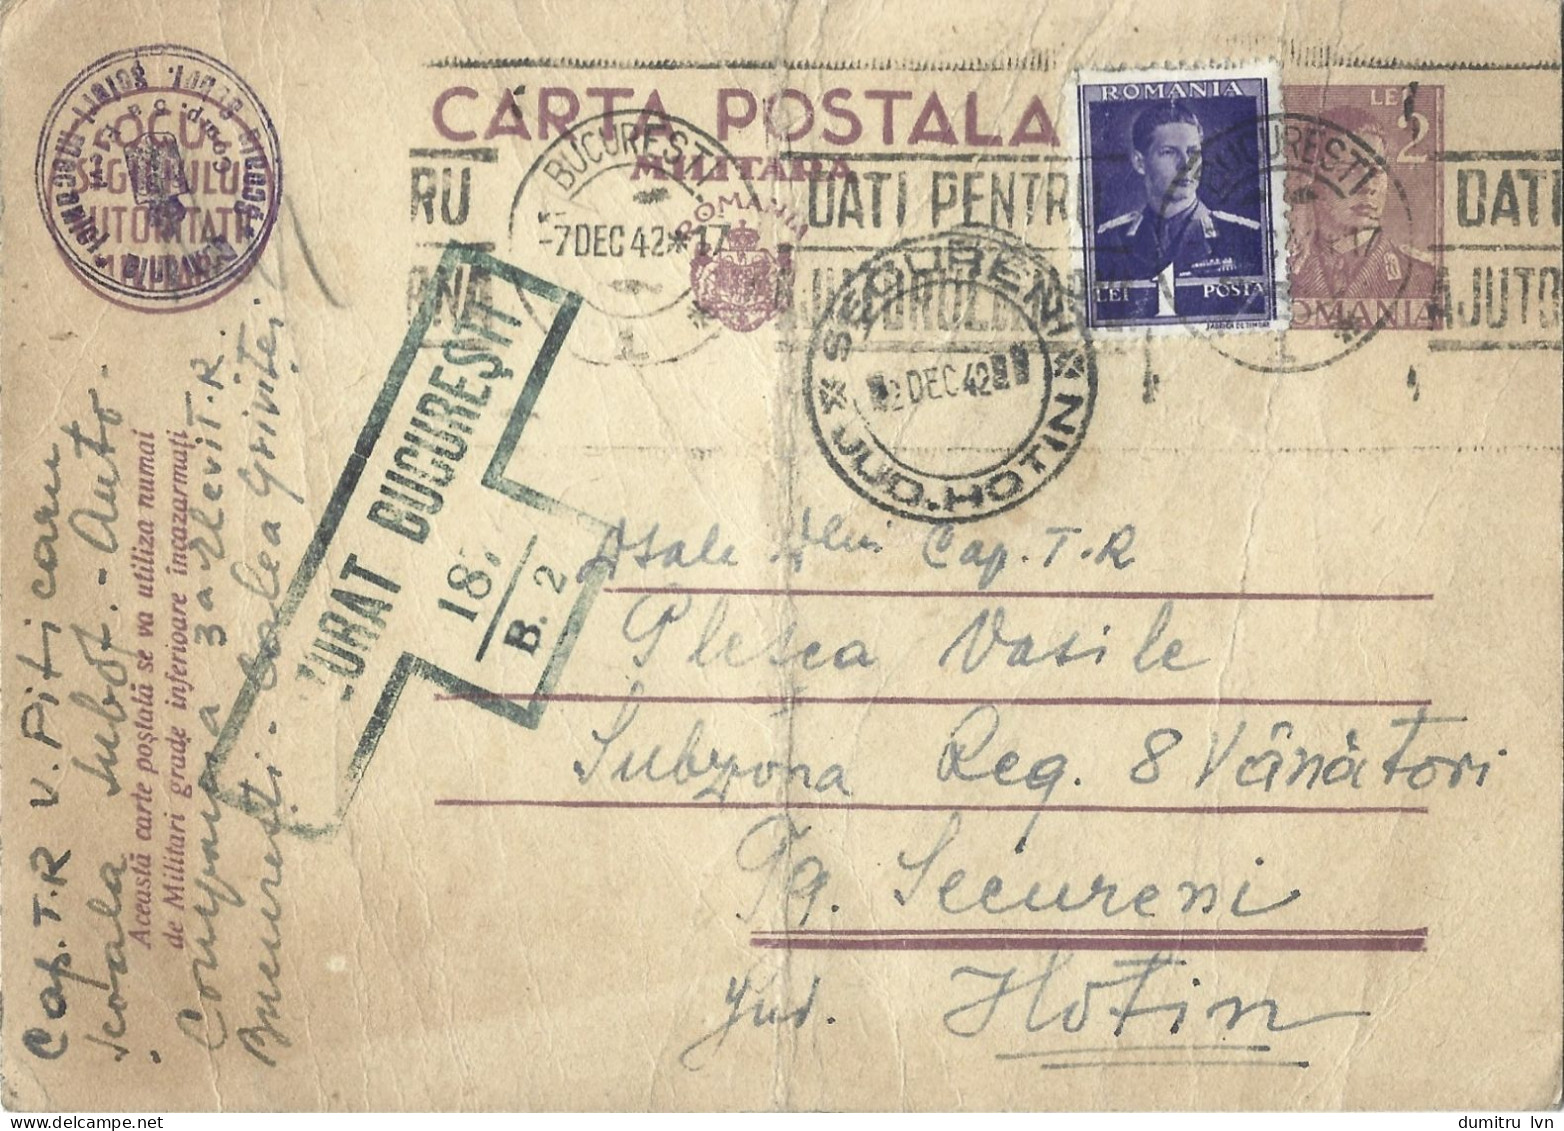 ROMANIA 1942 MILITARY POSTCARD, CENSORED, COMMUNIST PROPAGANDA STAMP POSTCARD STATIONERY - World War 2 Letters